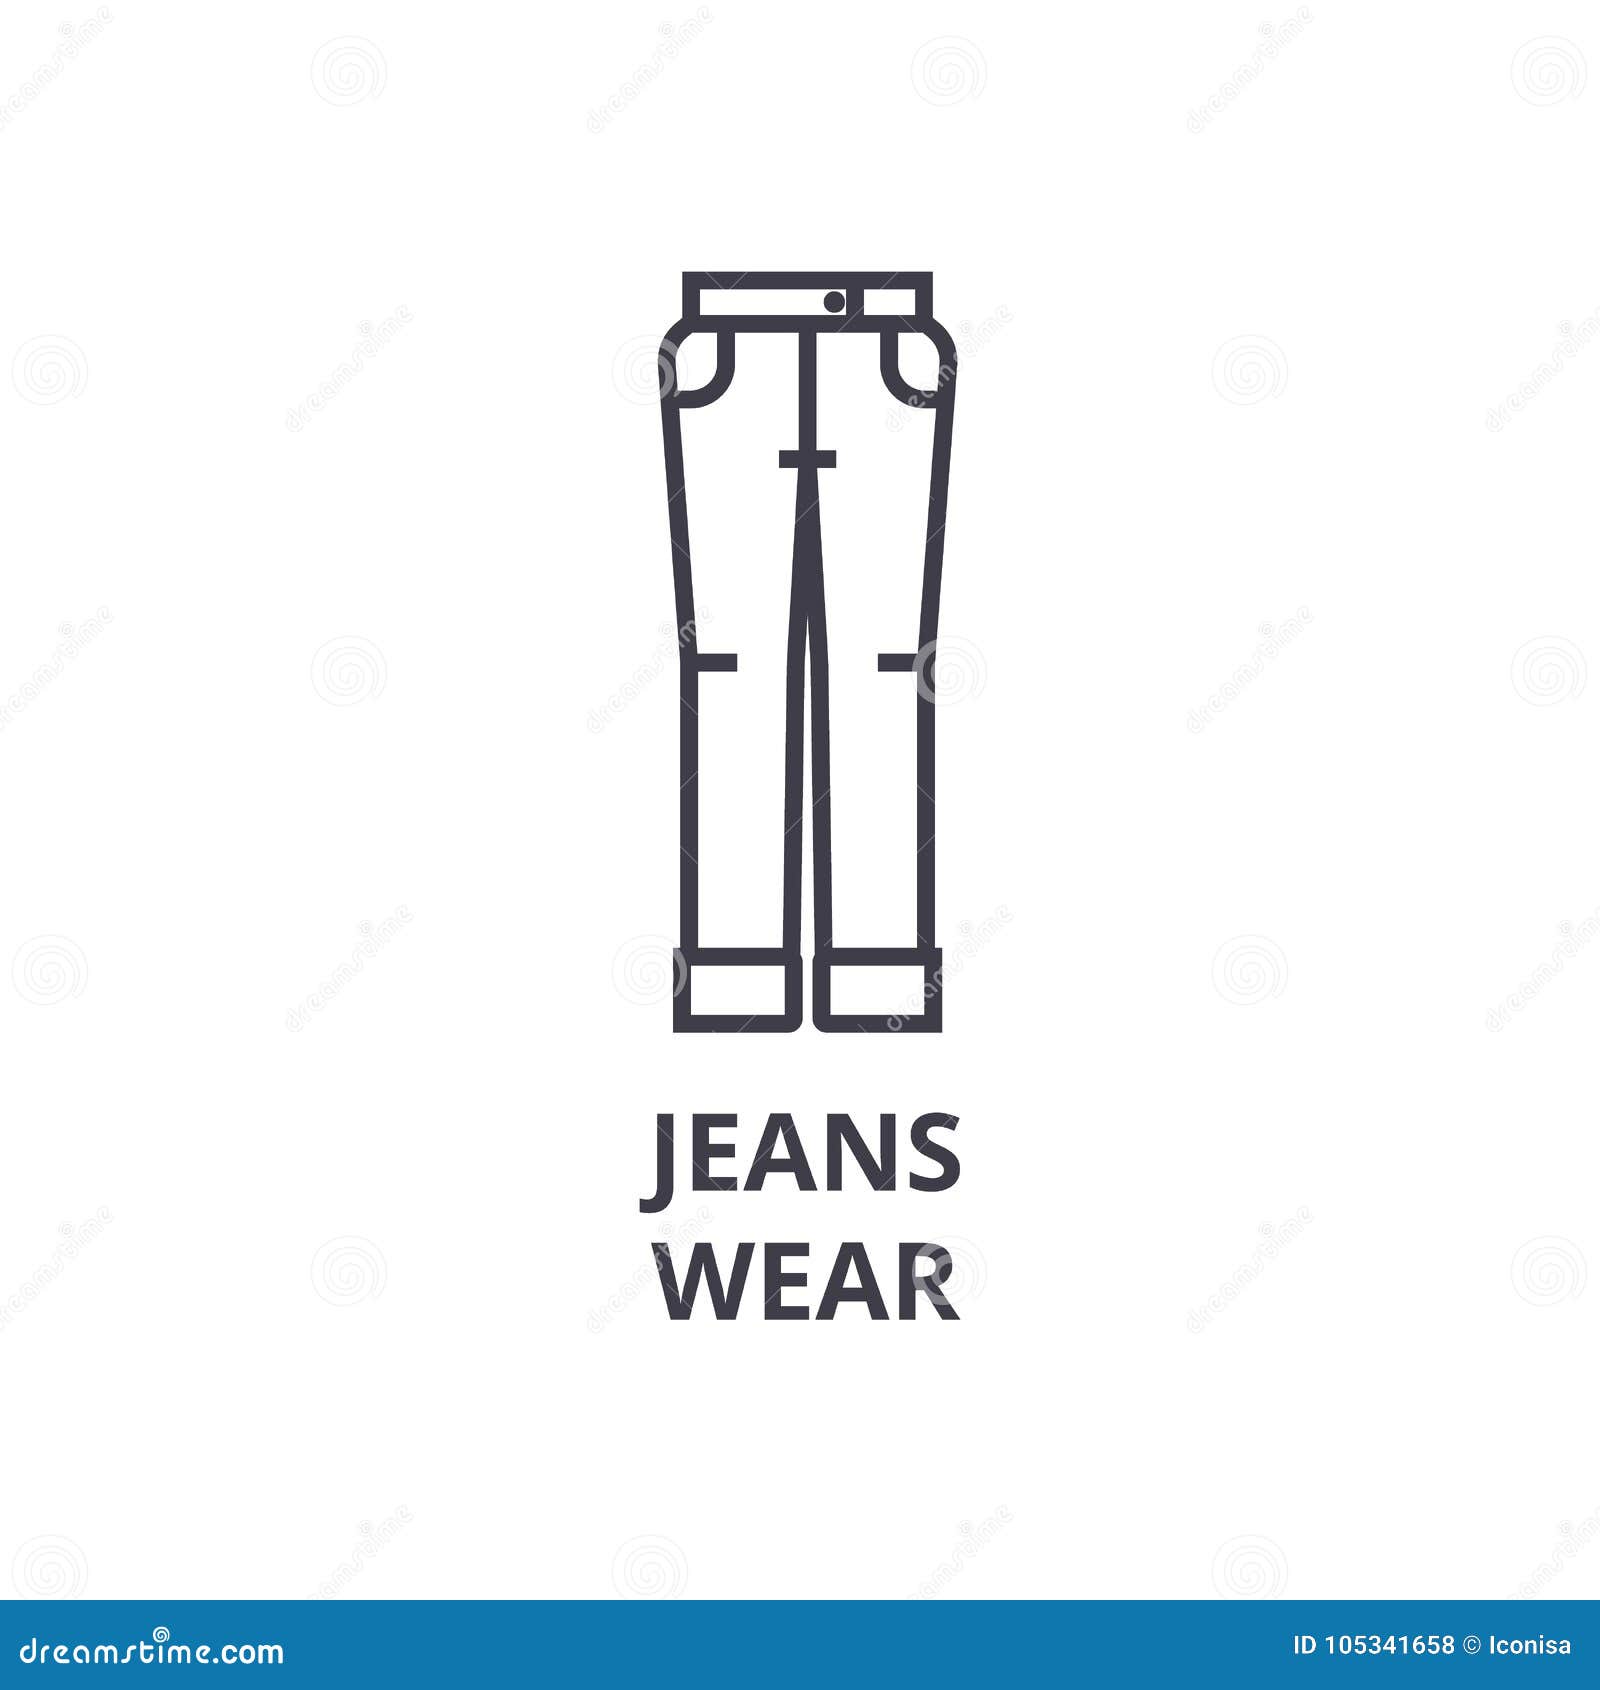 Wear jeans перевод на русский. Джинсы символ. Sheriff Jeans Wear логотип. Уходовые знаки для джинсов. 3pm Wear Jeans логотип.